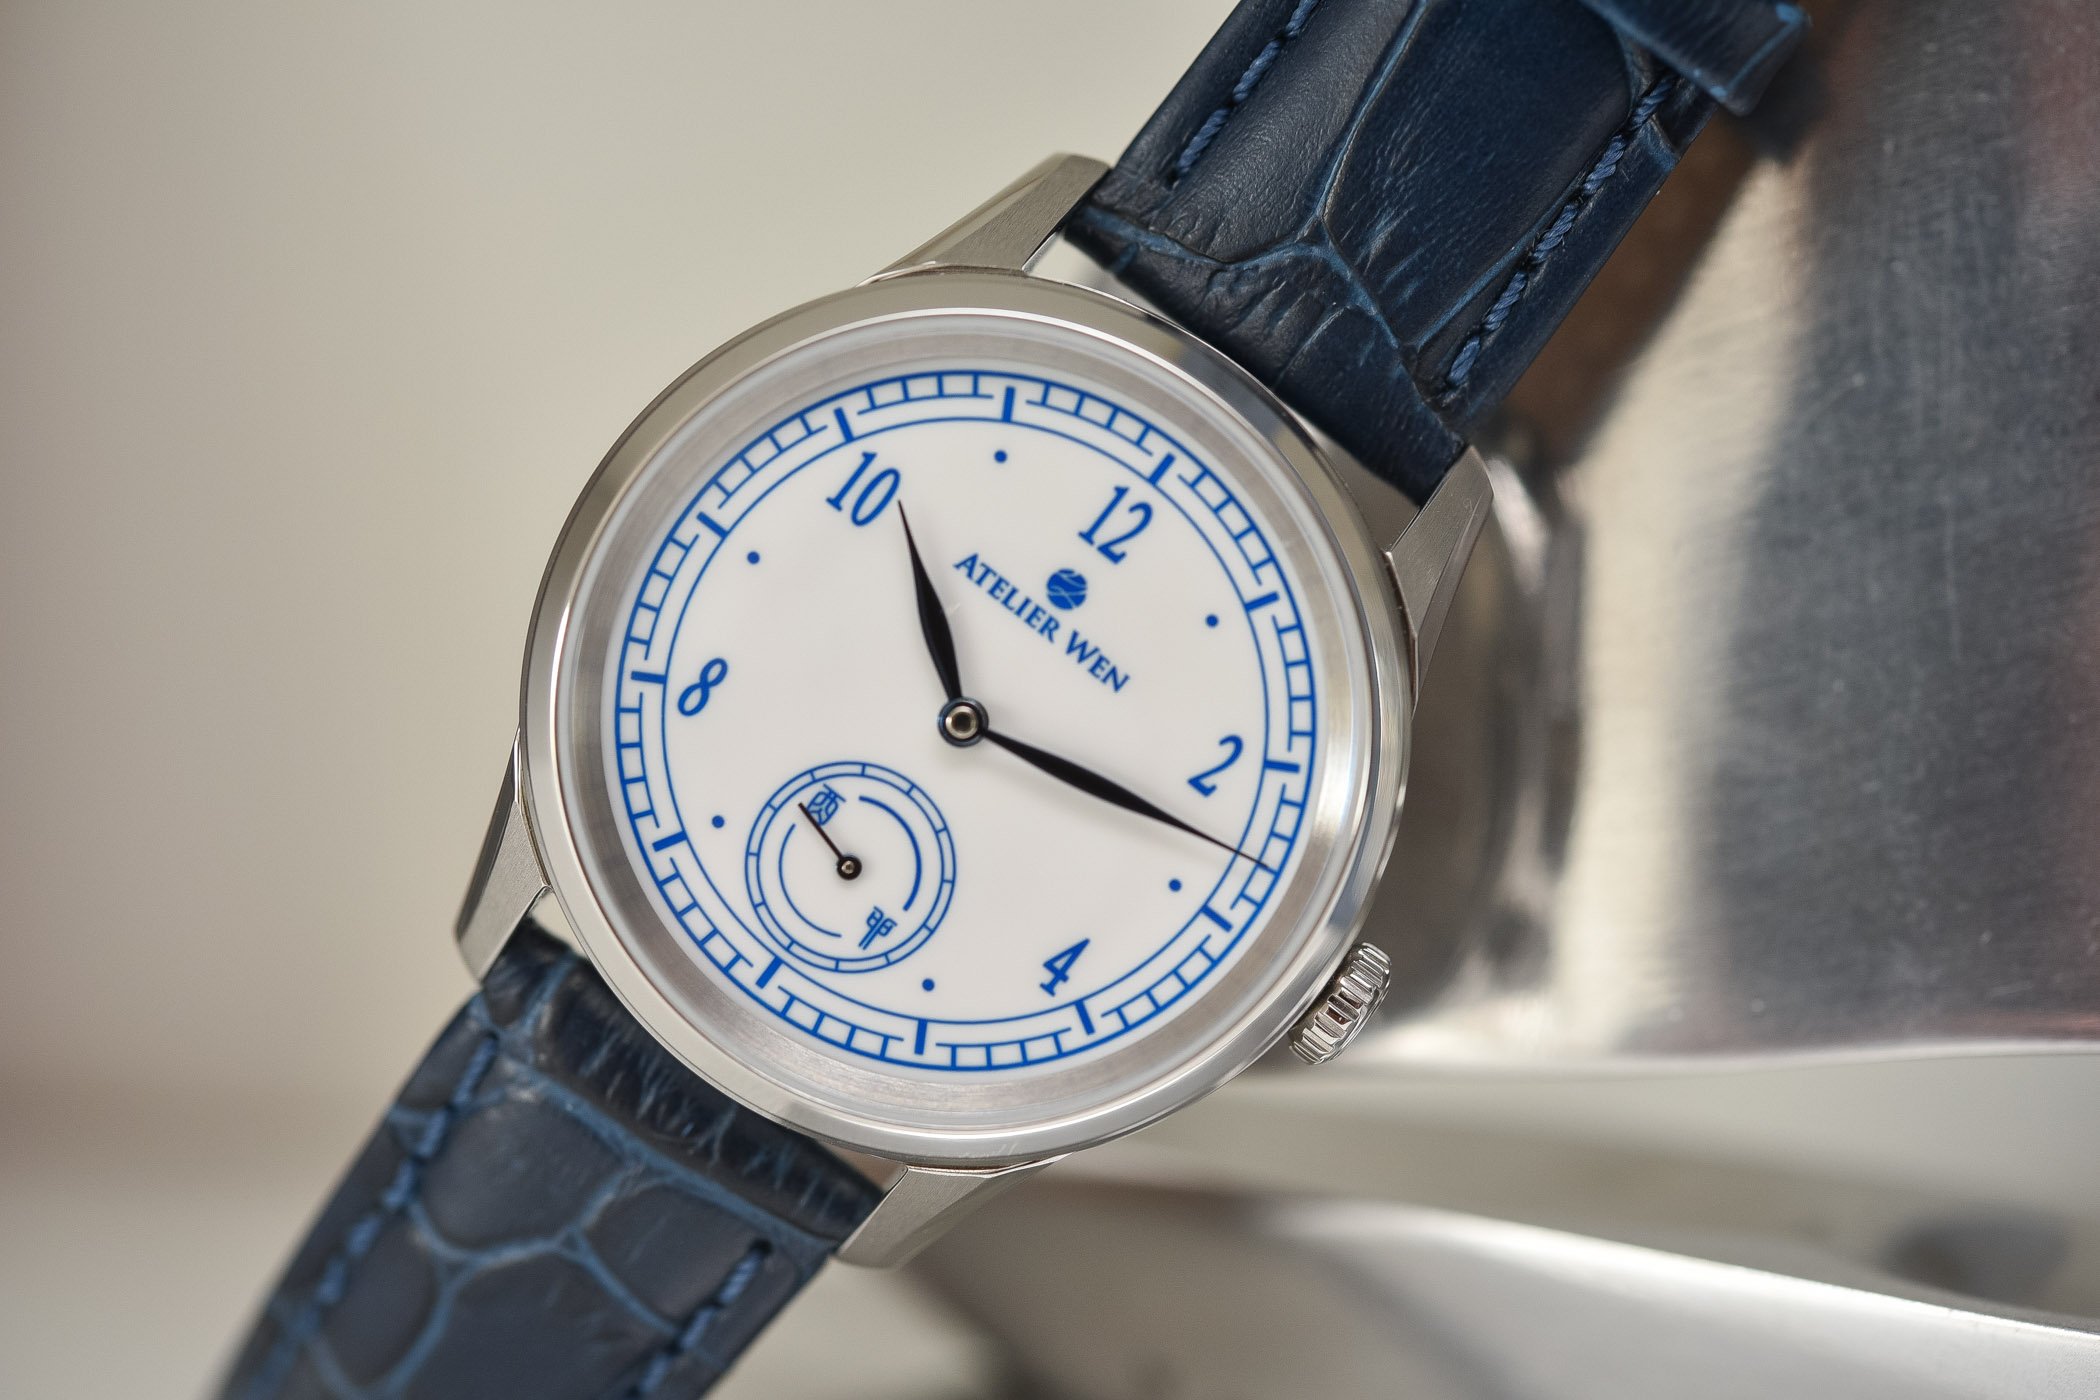 Atelier Wen Procelain dial China-inspired Watches Kickstarter - 3